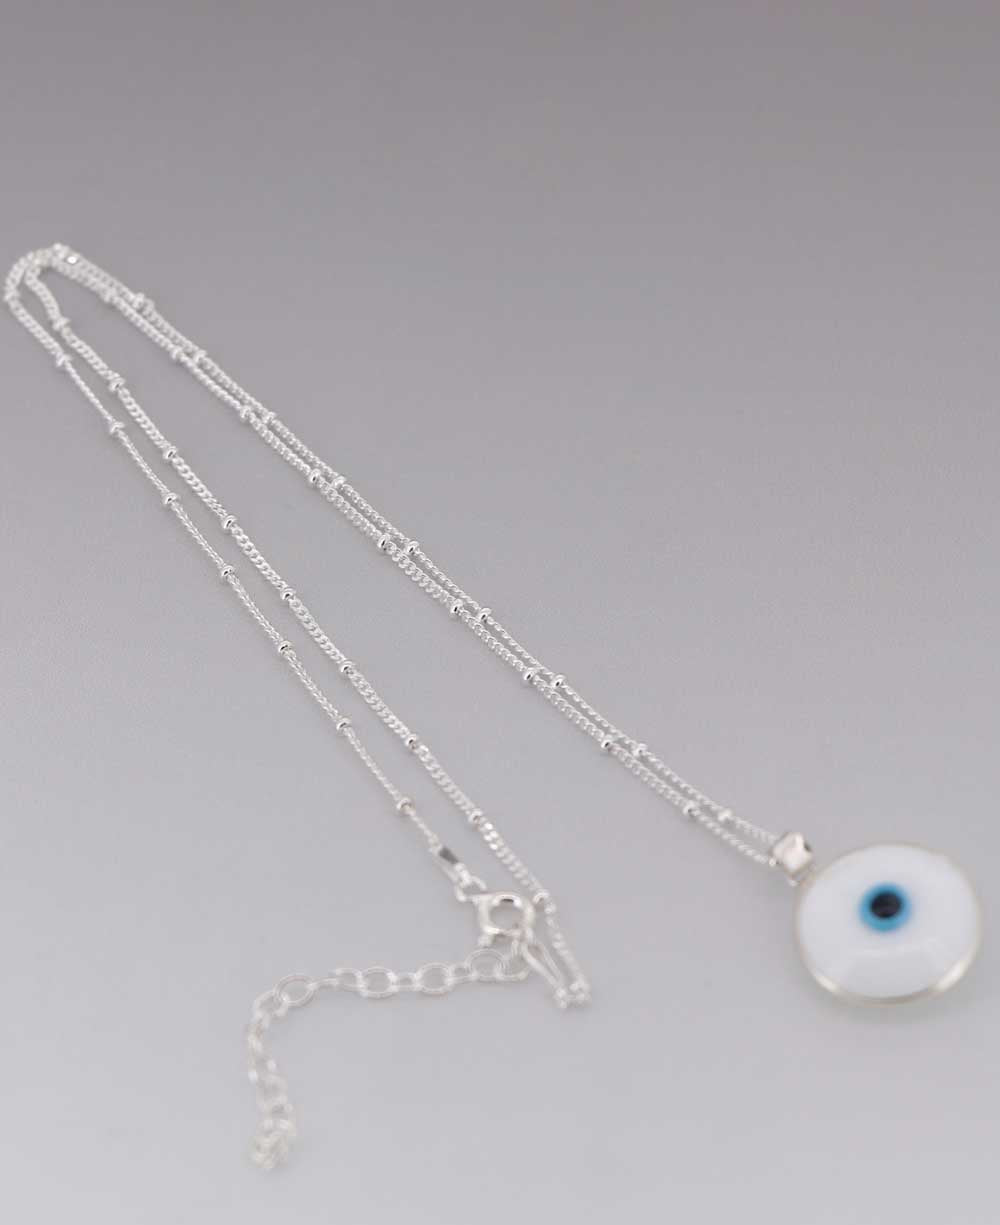 Enamel Work Small Evil Eye Charm Necklace - Necklace White